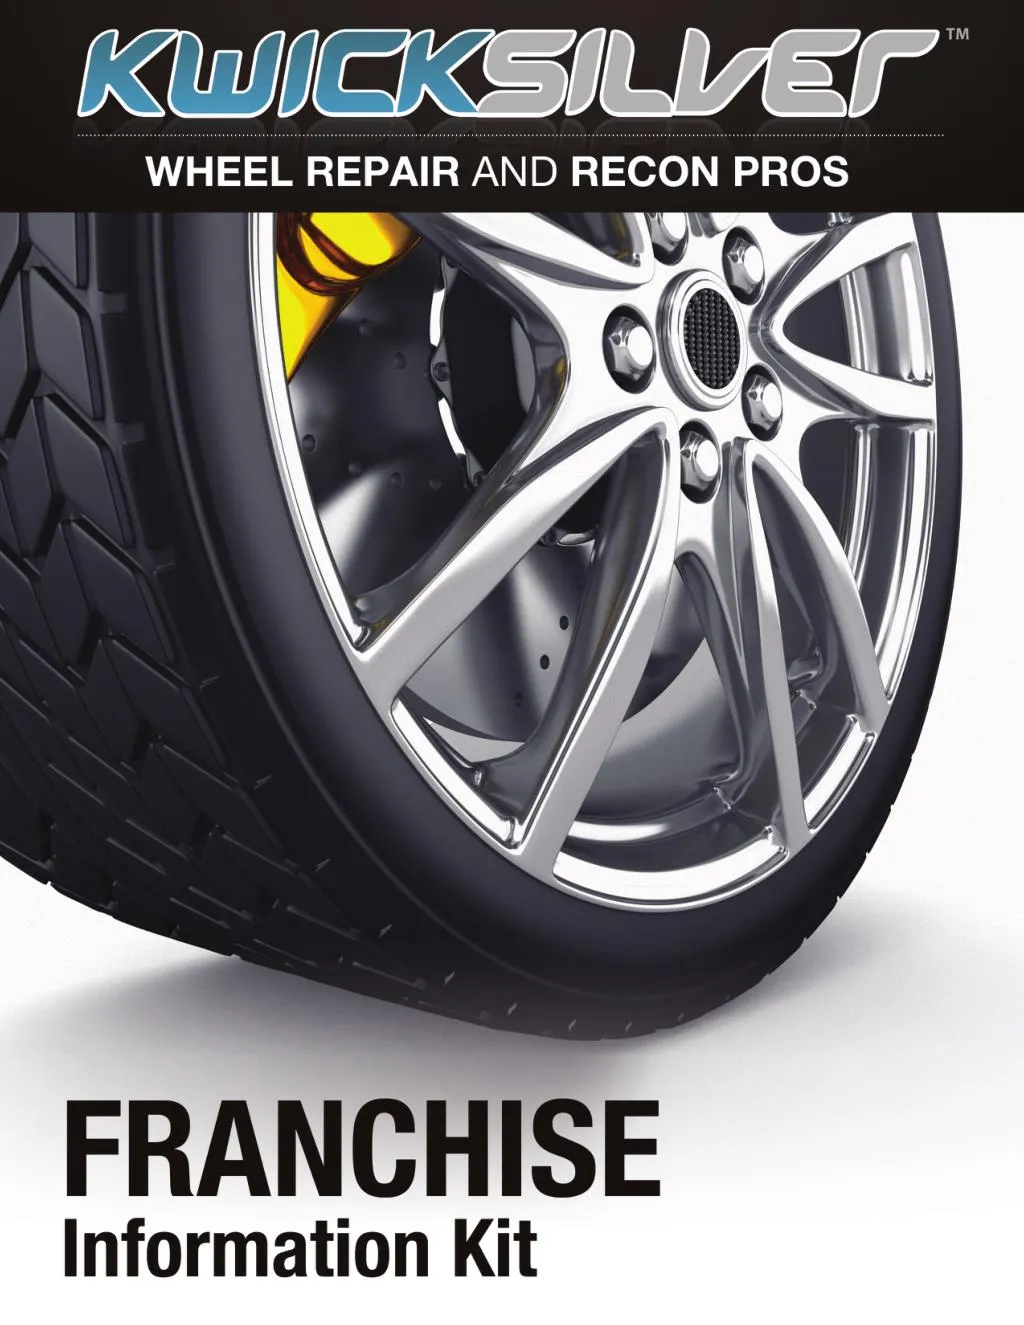 wheel repair and recon pros